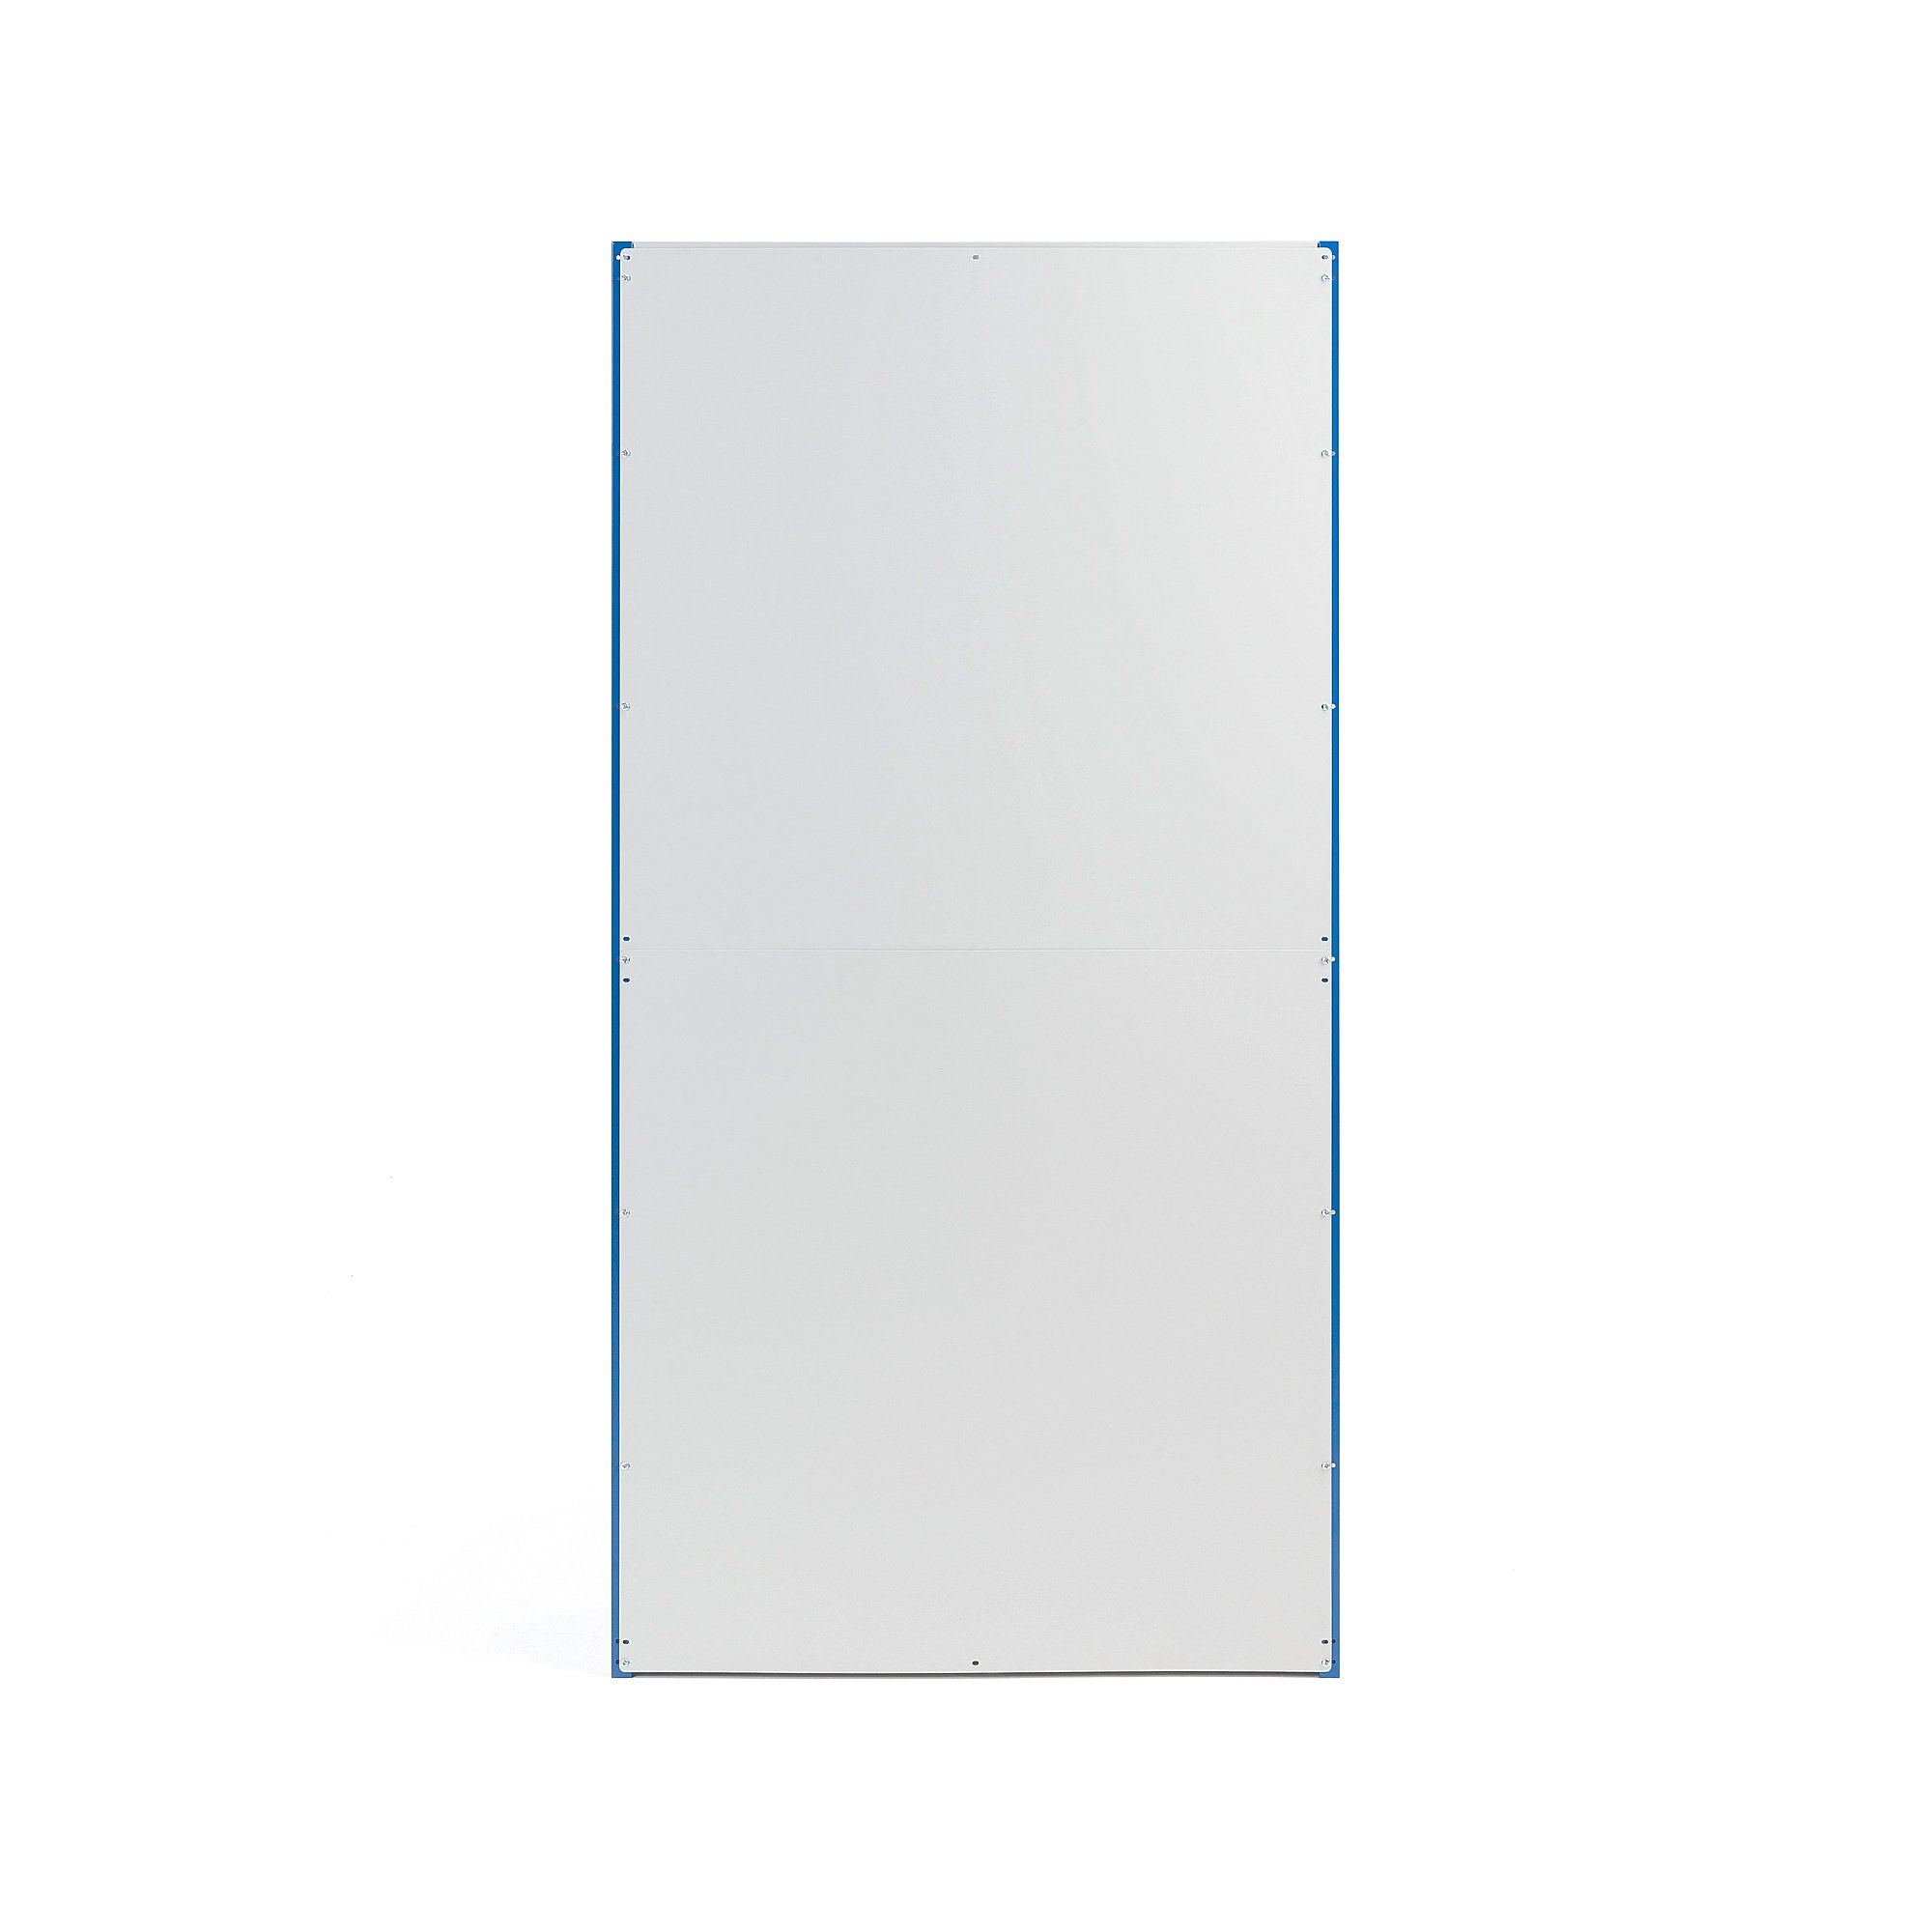 E-shop Zadný panel MIX, vhodný pre uzavreté koncové rámy, 1740 x 1000 mm, šedá